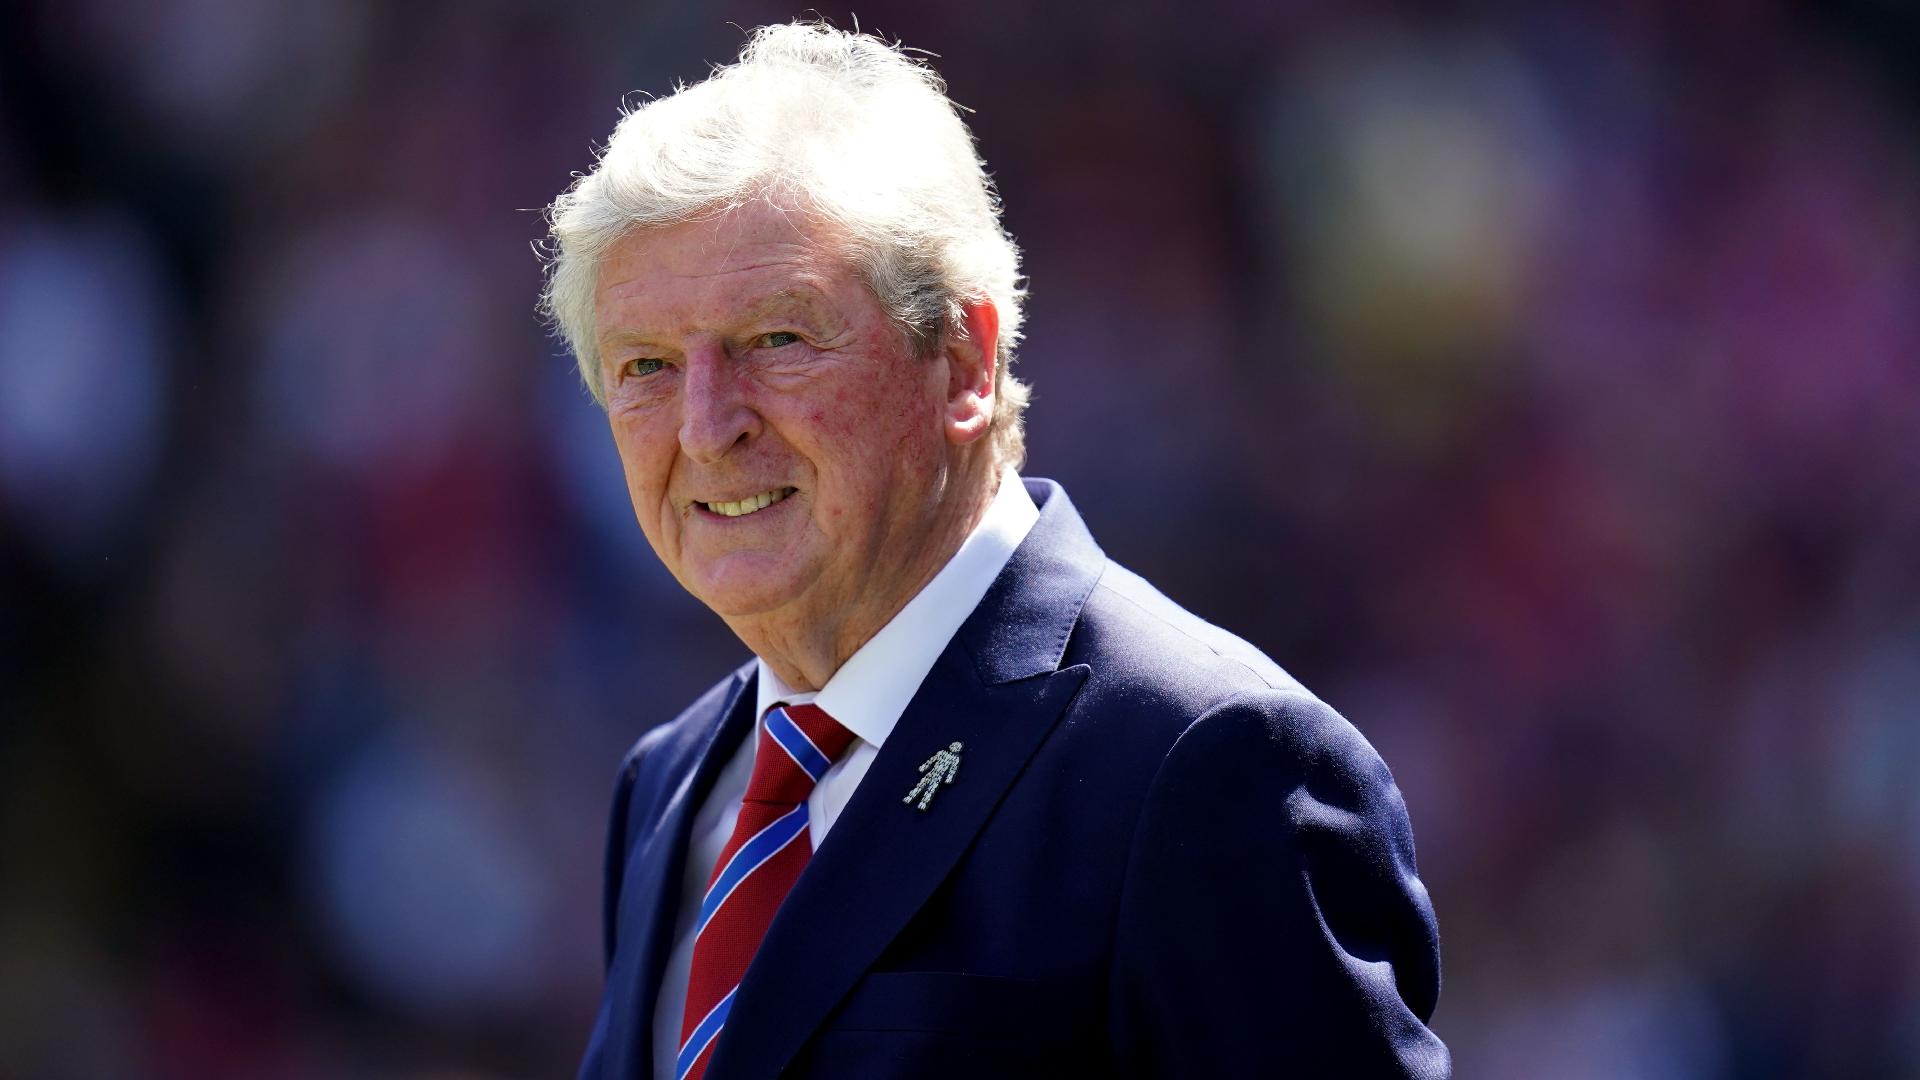 Palace boss Hodgson won's say he's retiring